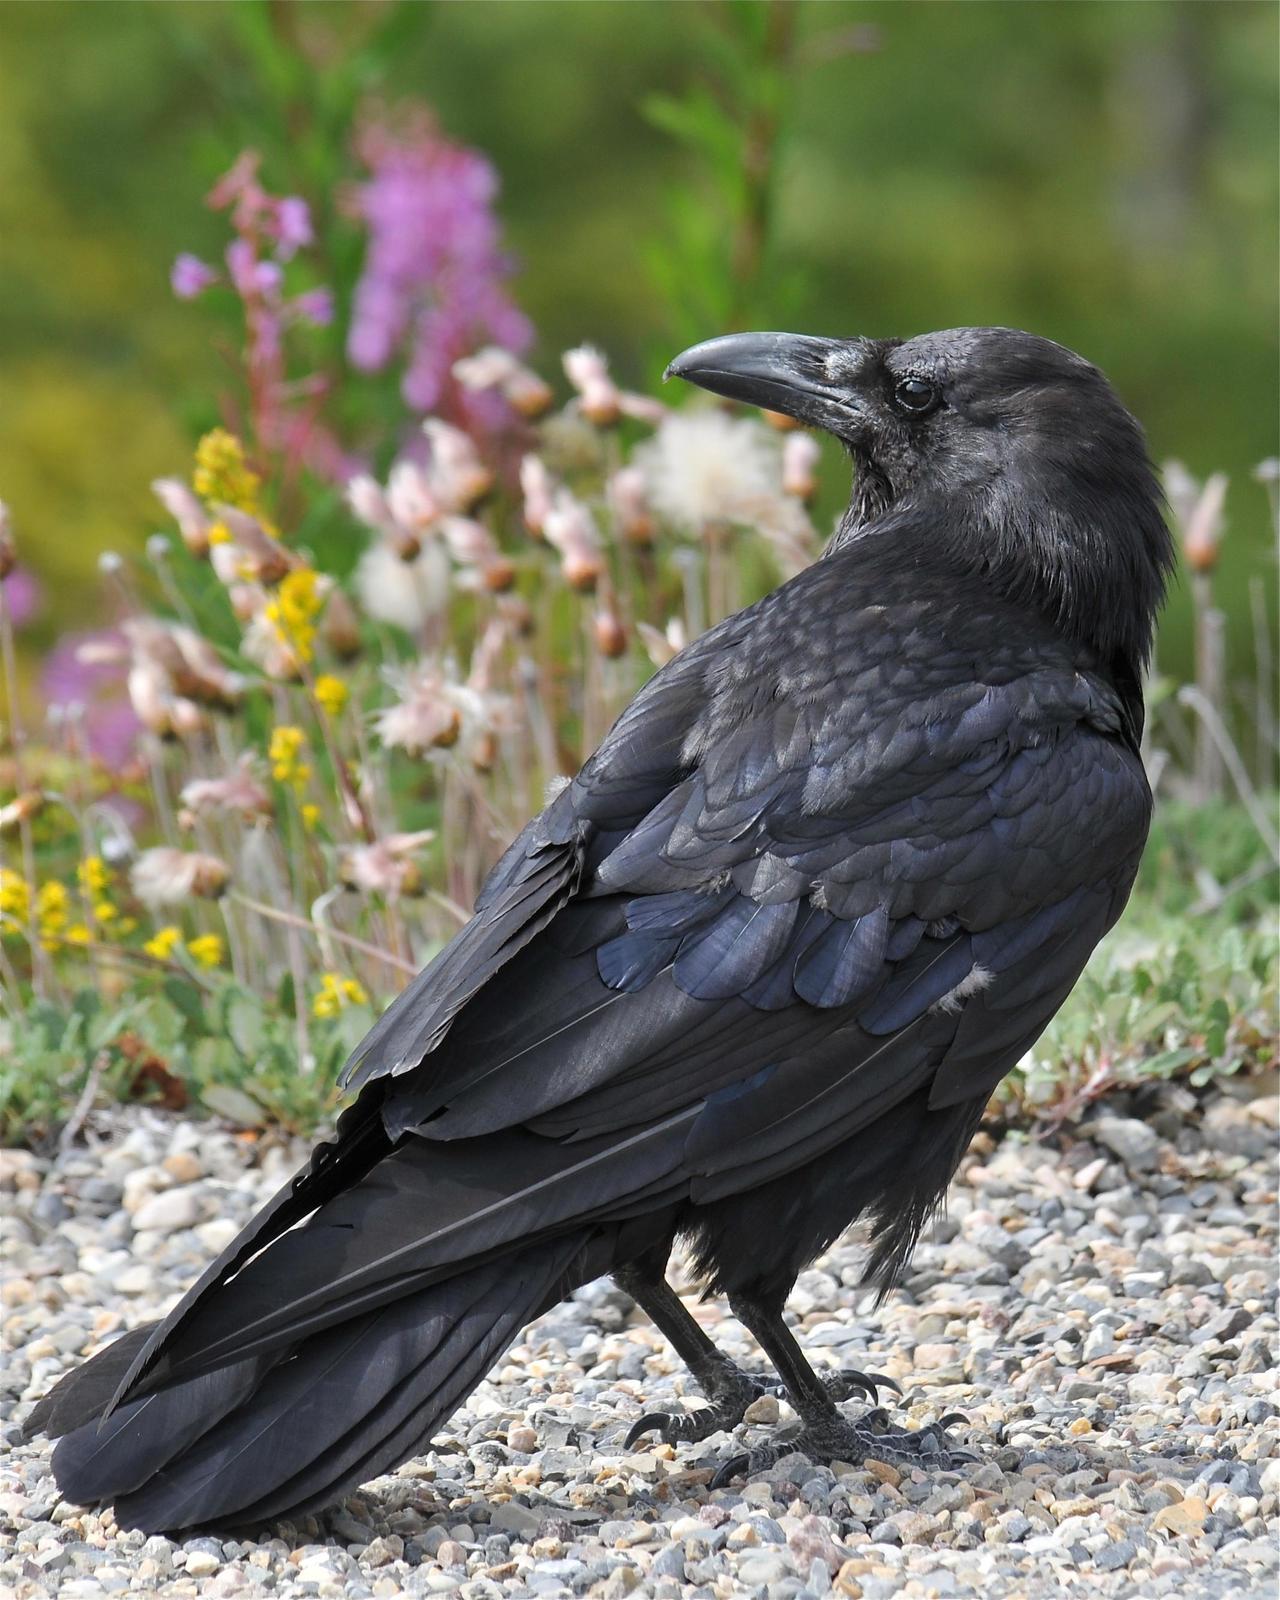 Common Raven Photo by Gerald Friesen